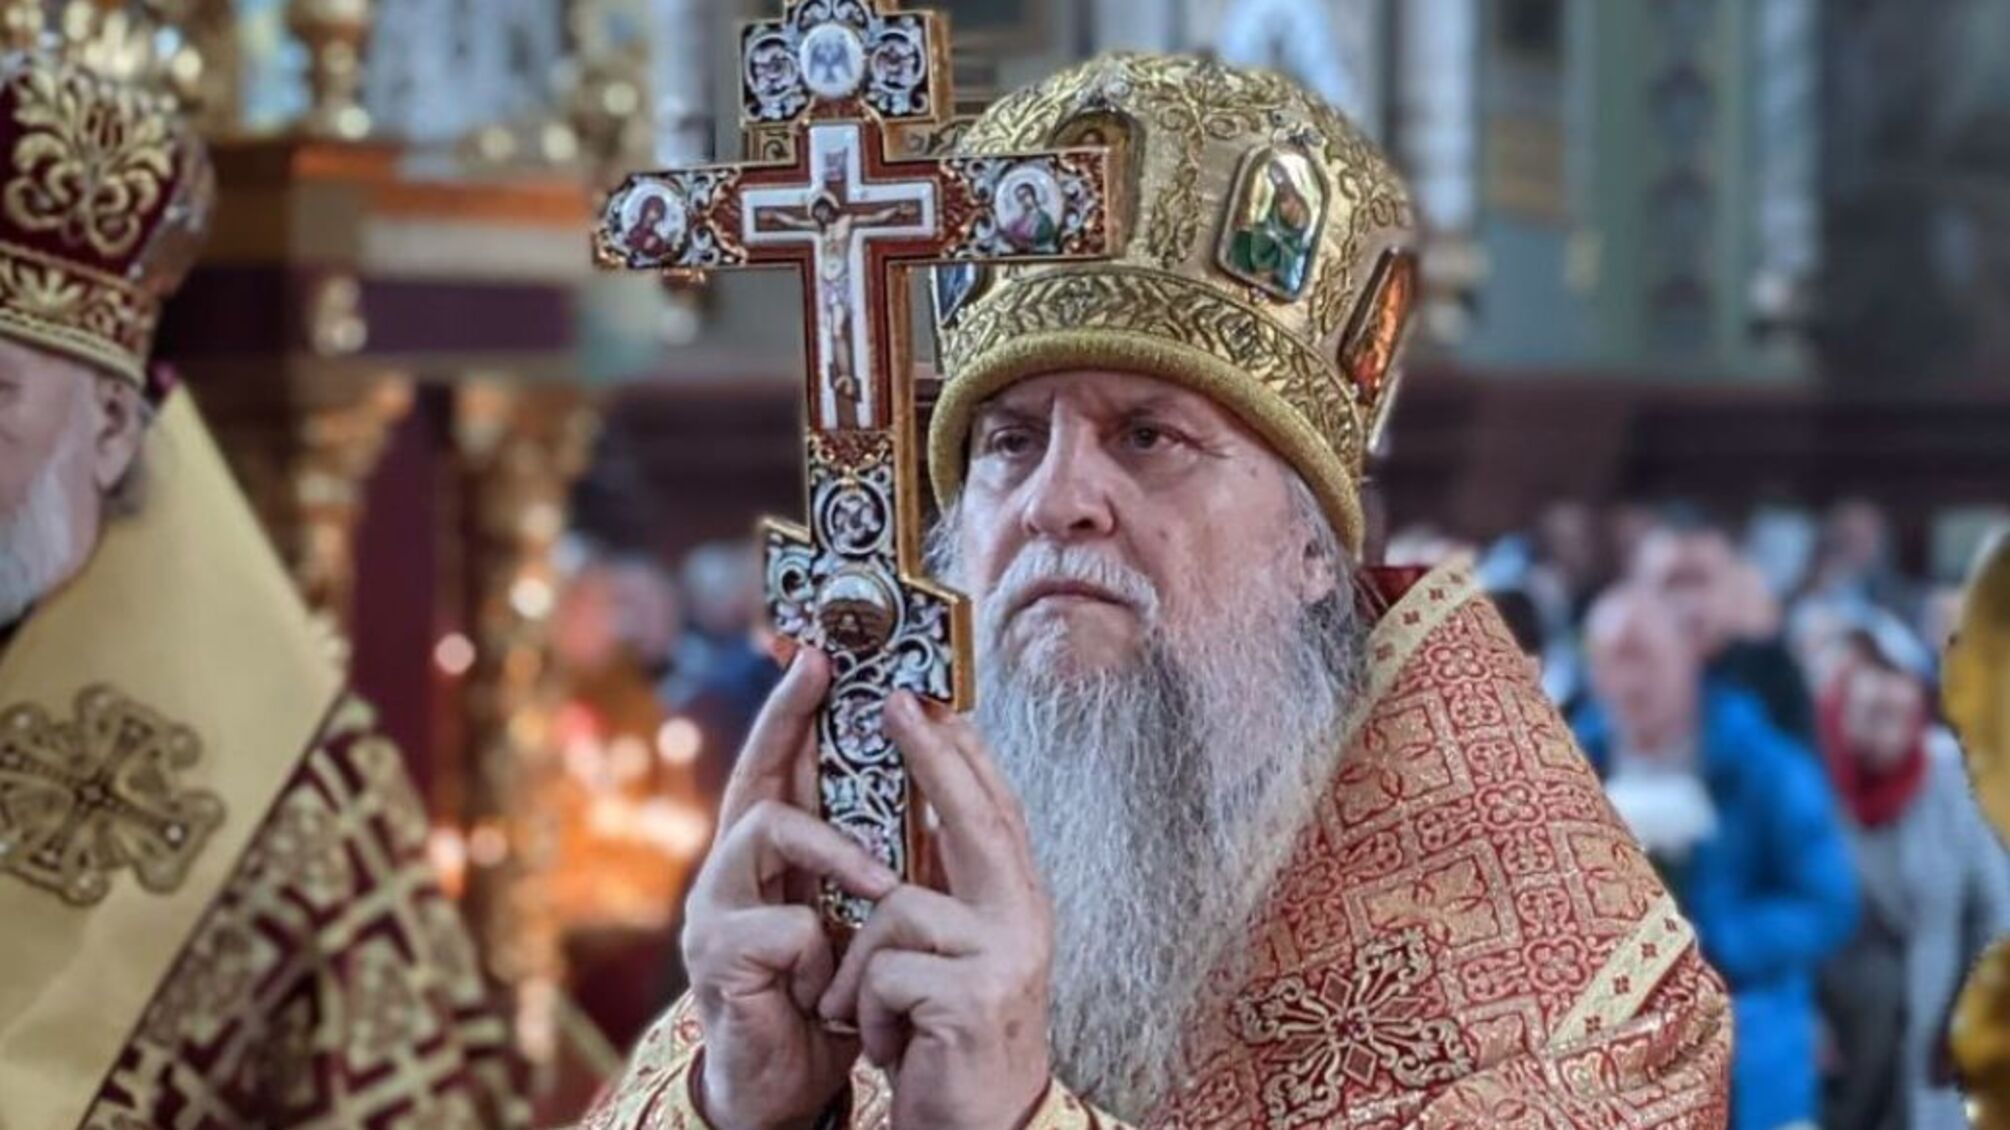 Противоречивая фигура: митрополит Ионафан и его увольнение по инициативе РПЦ